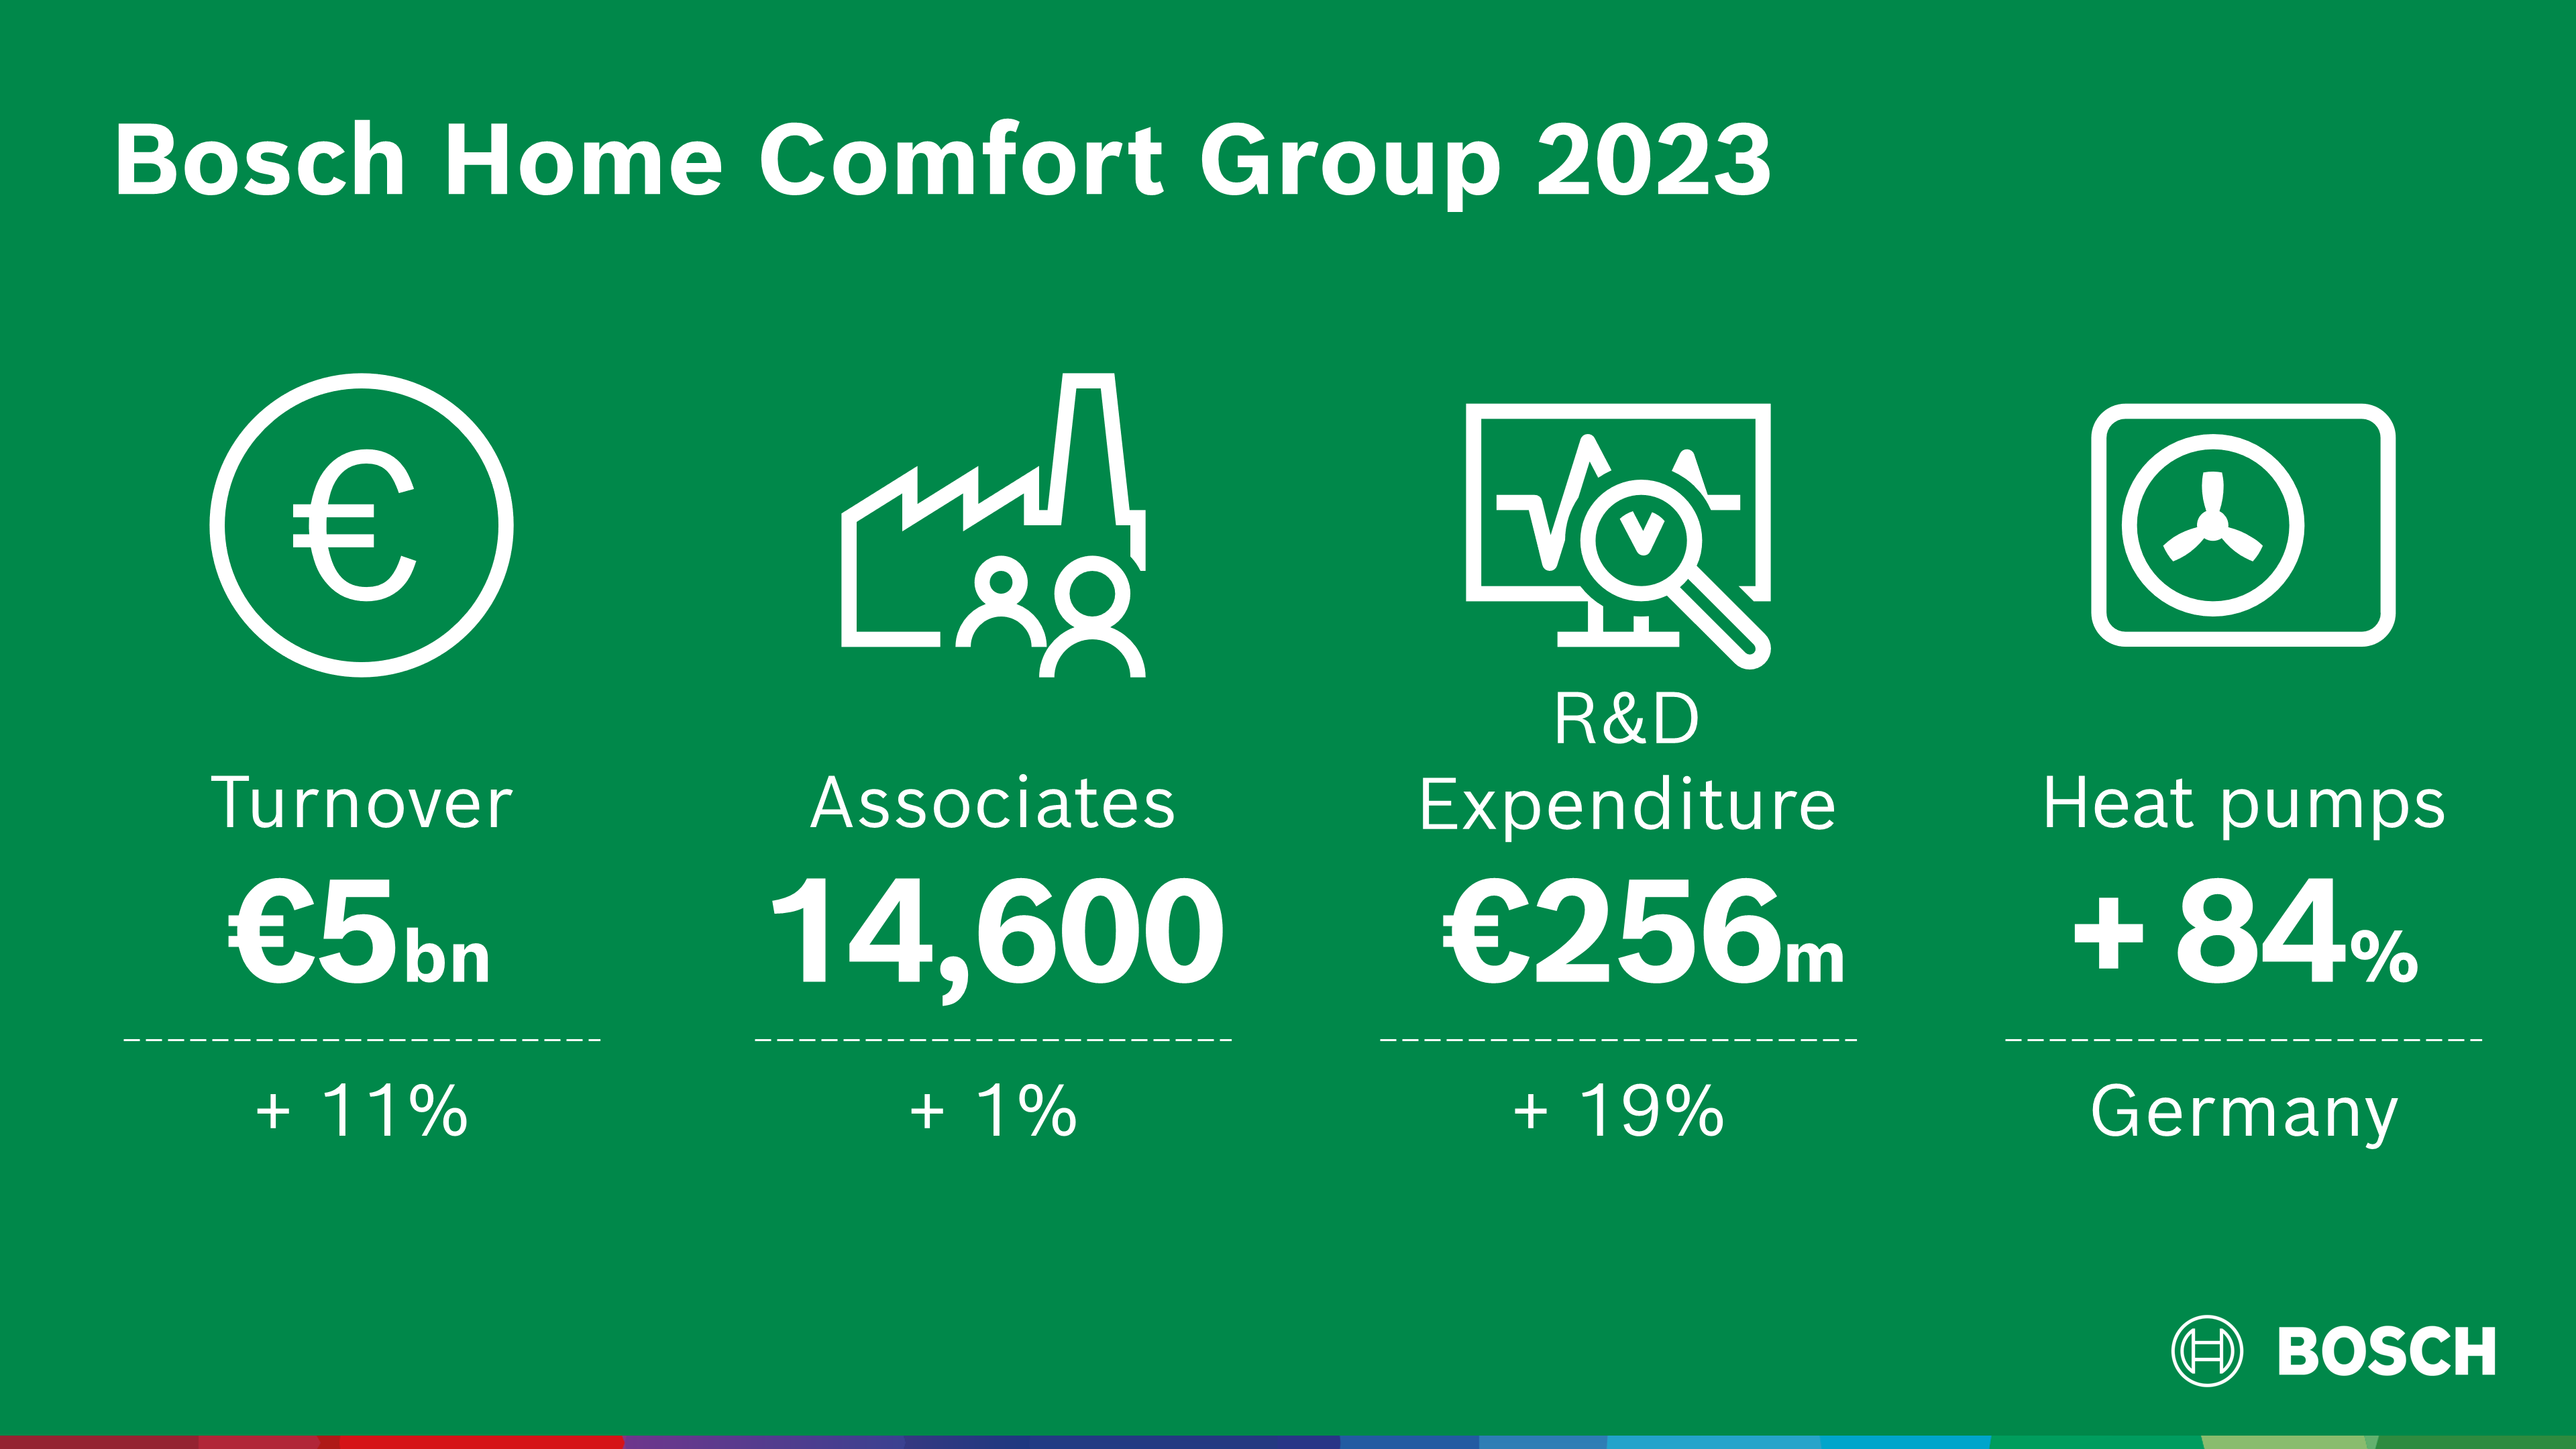 Bosch Home Comfort Group 2023